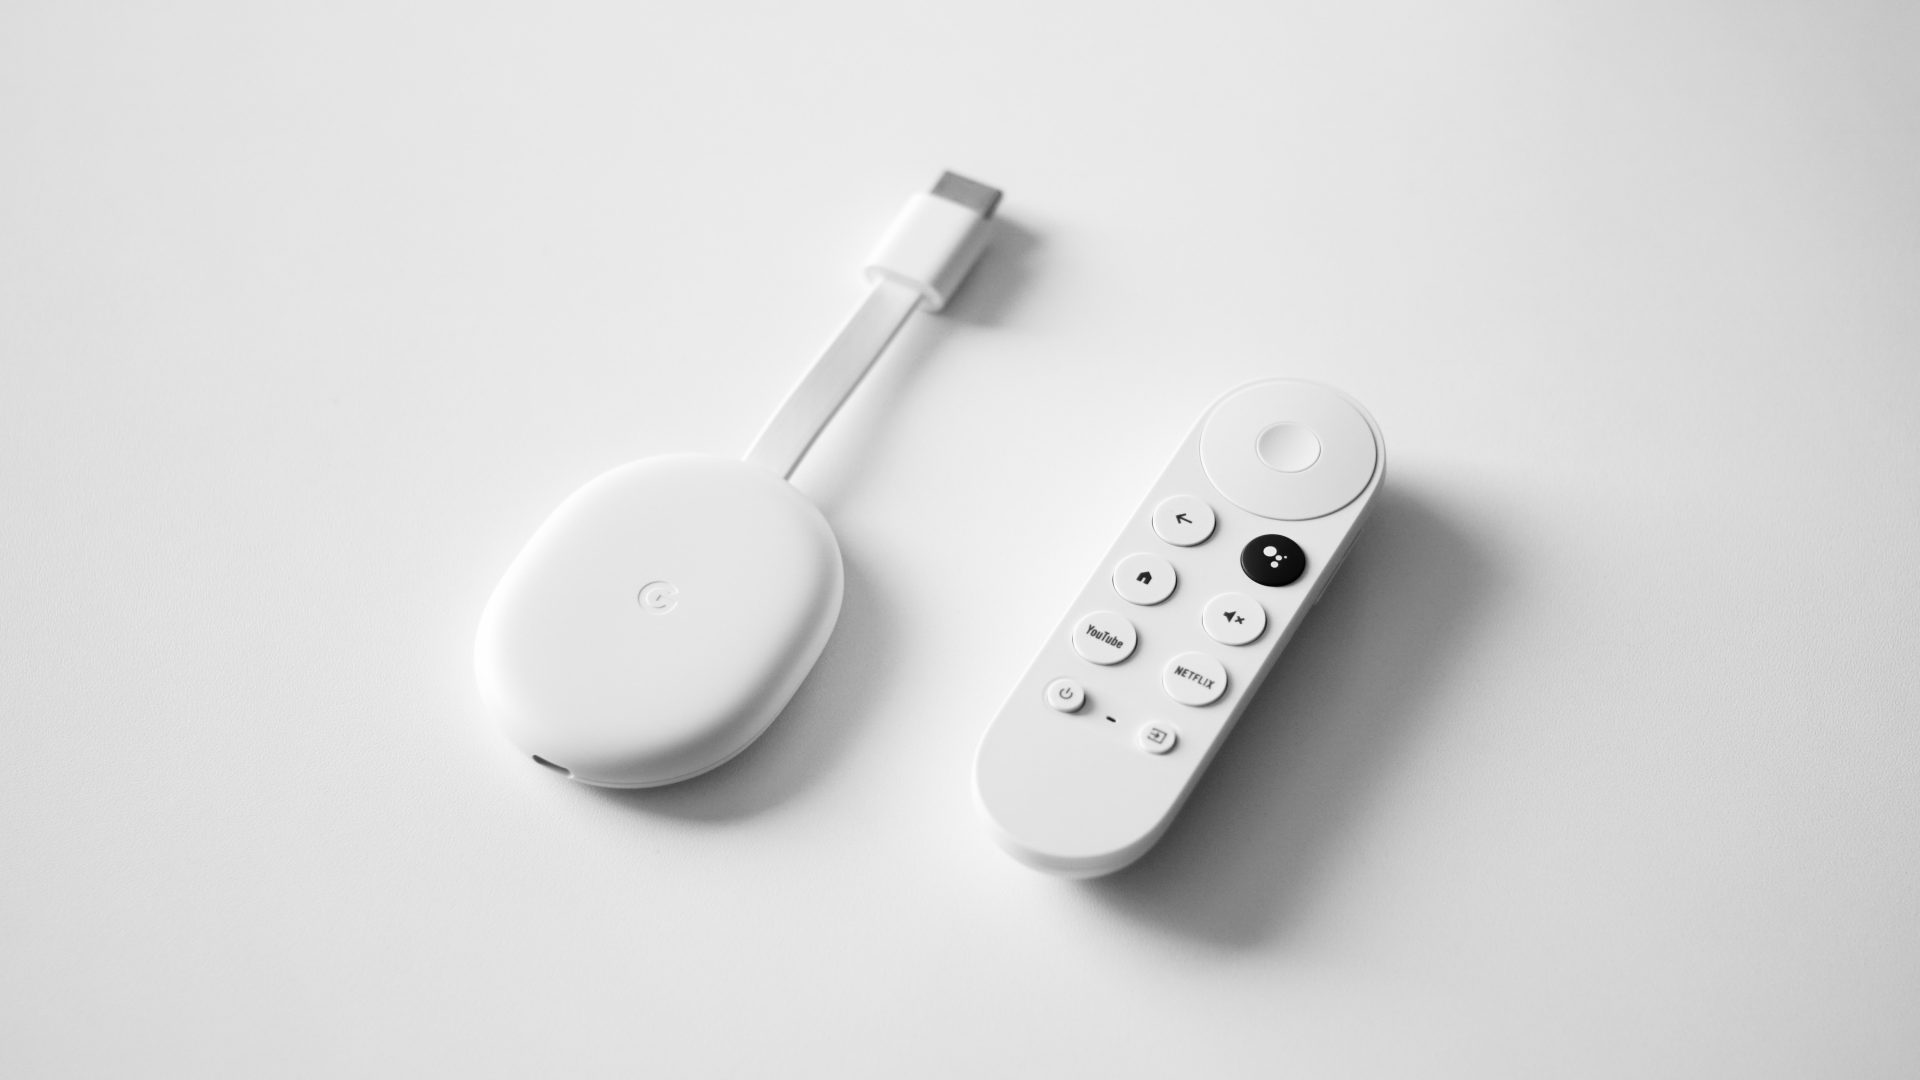 chromecast device and remote